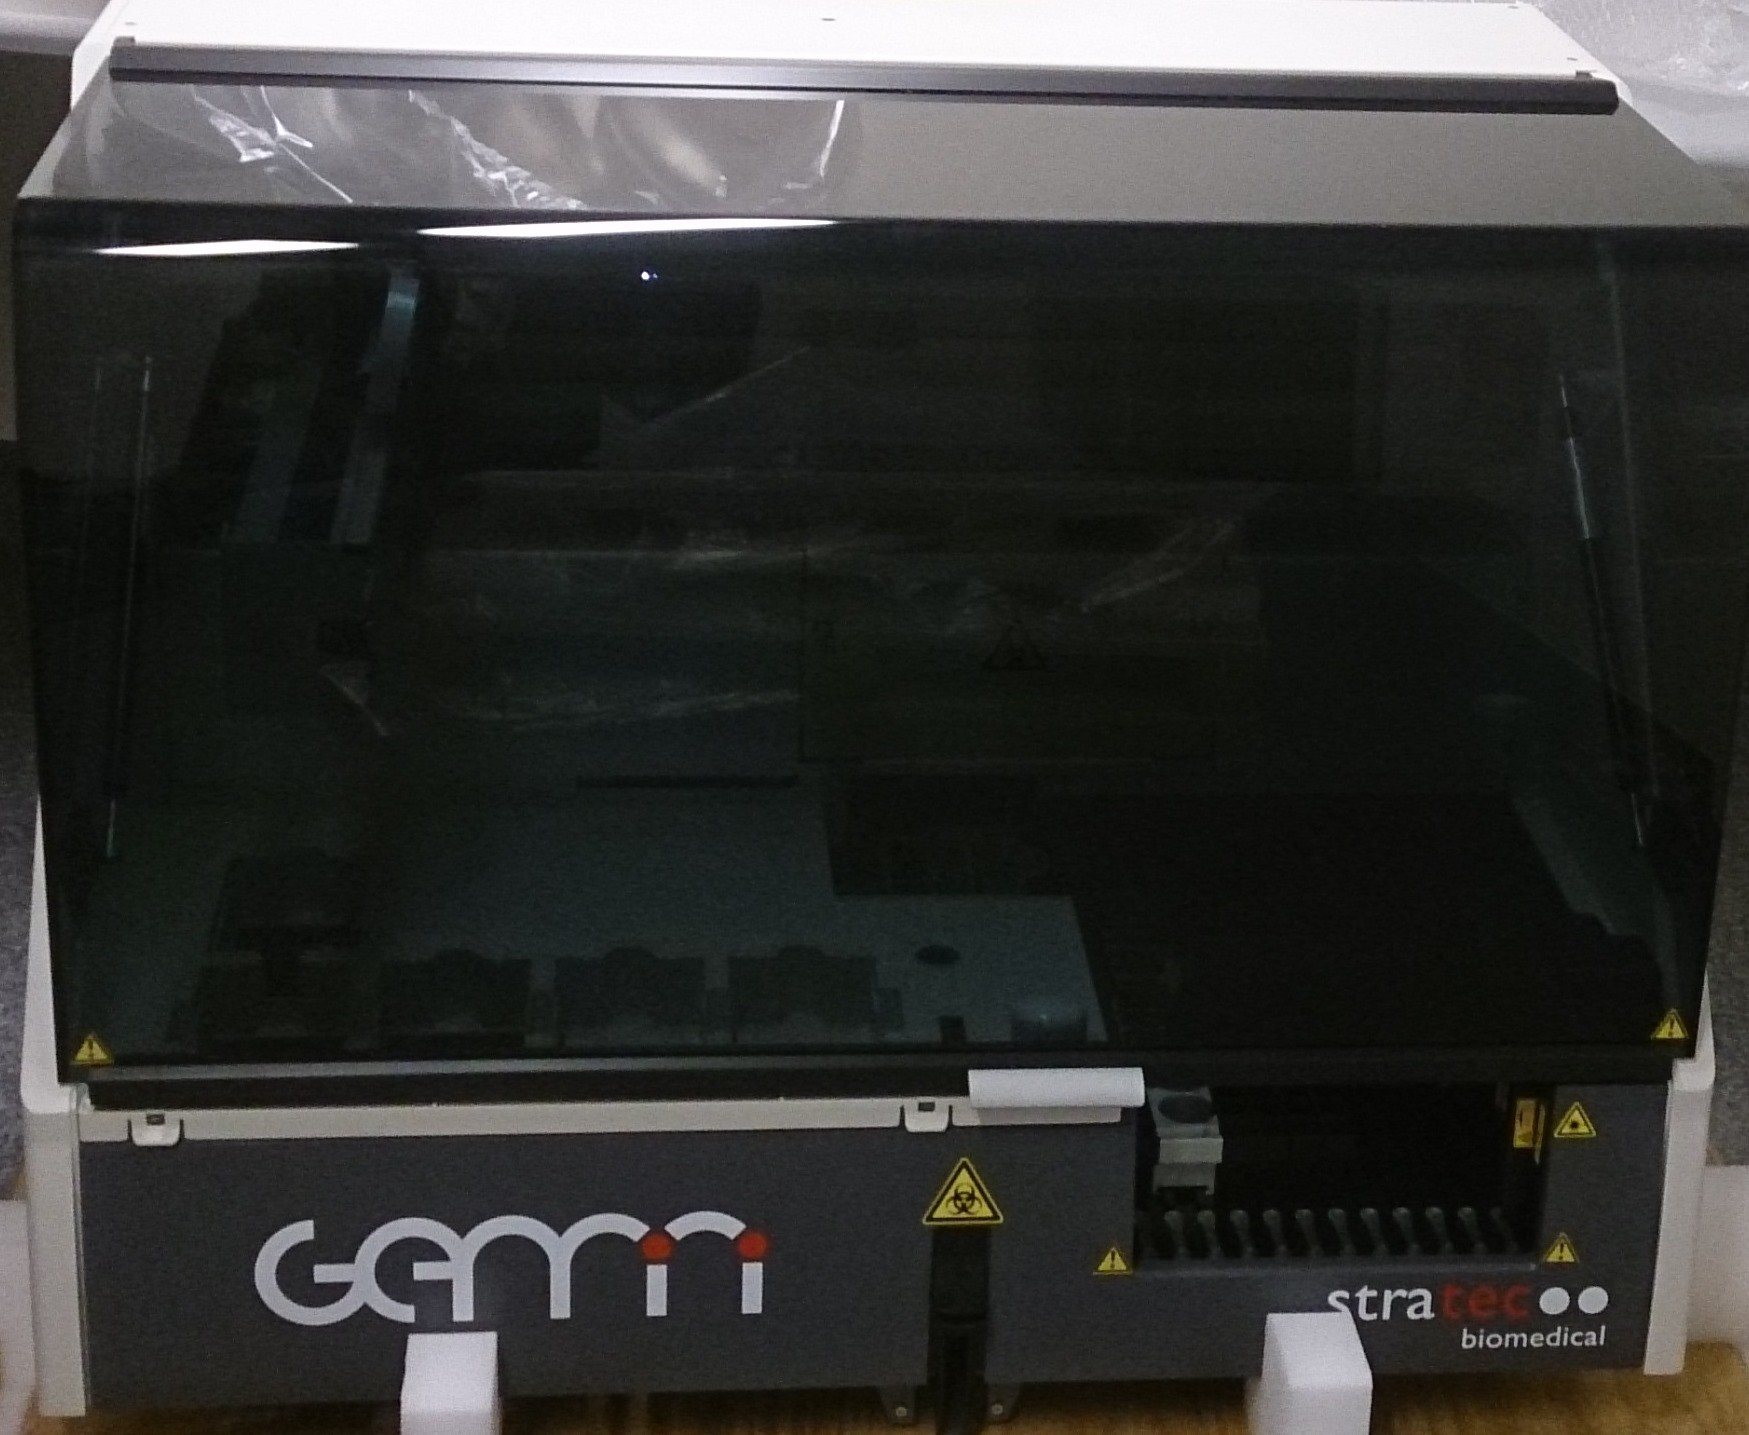 Automated microplate processor Gemini, Stratec biomedical AG